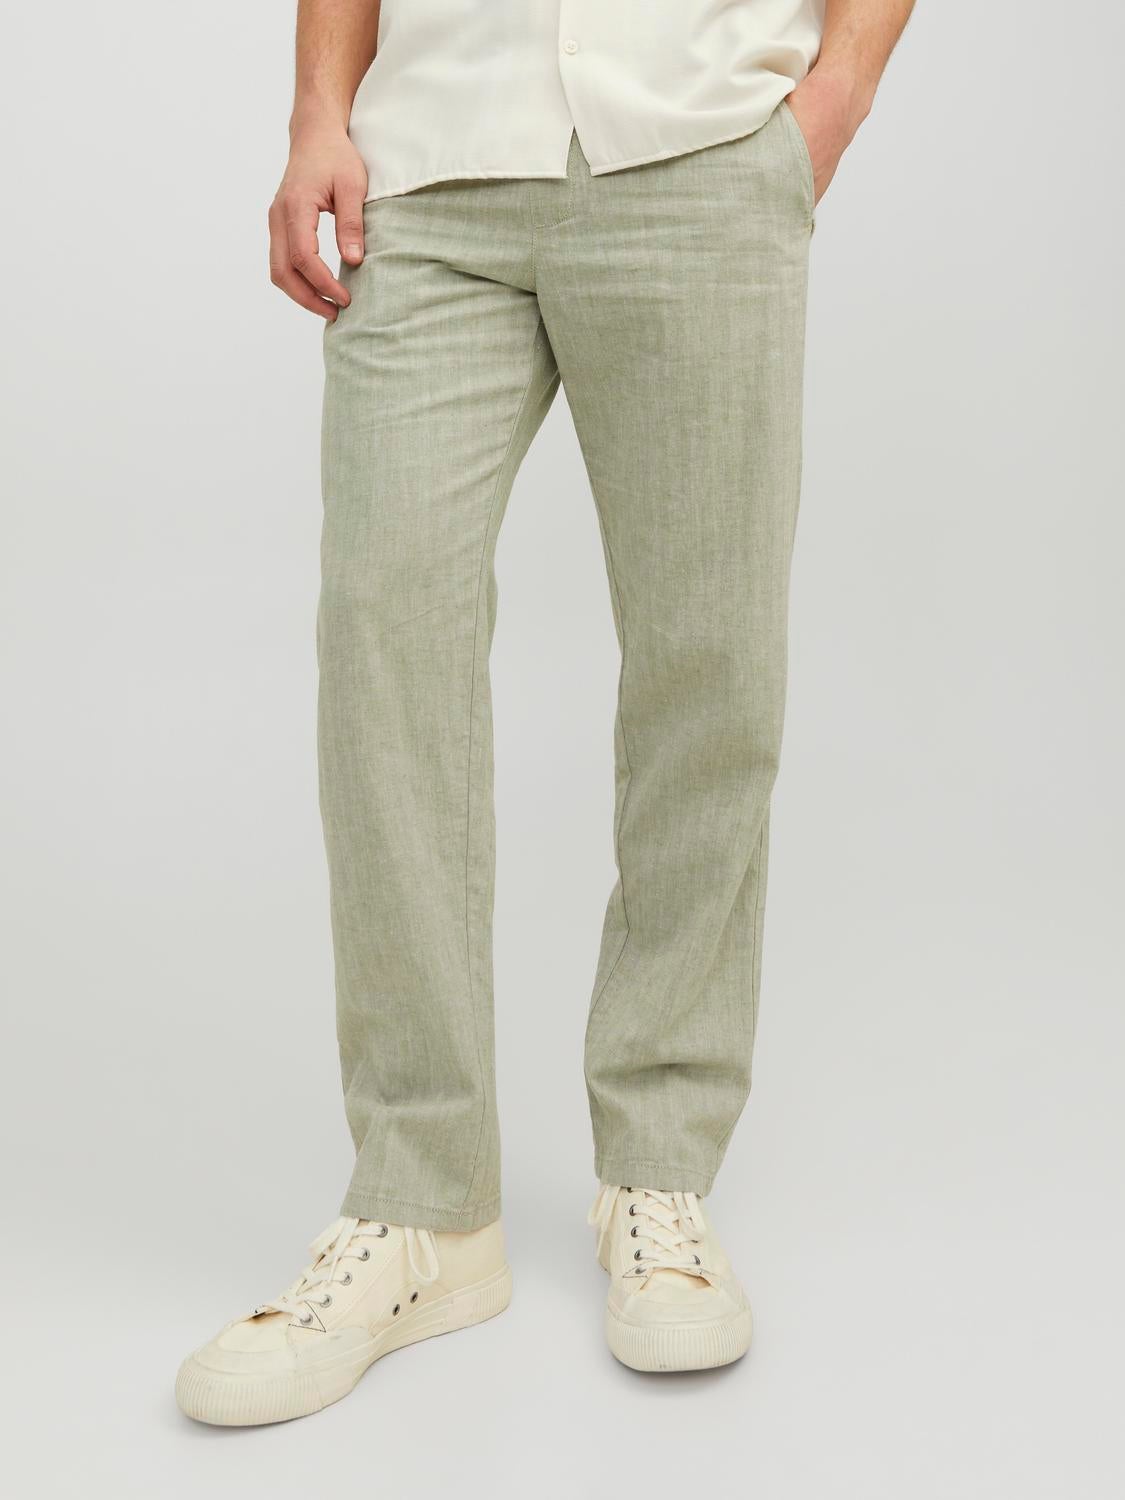 Gap White Cotton Linen Summer Trousers Chino Style Pants Size UK8 Lined |  eBay